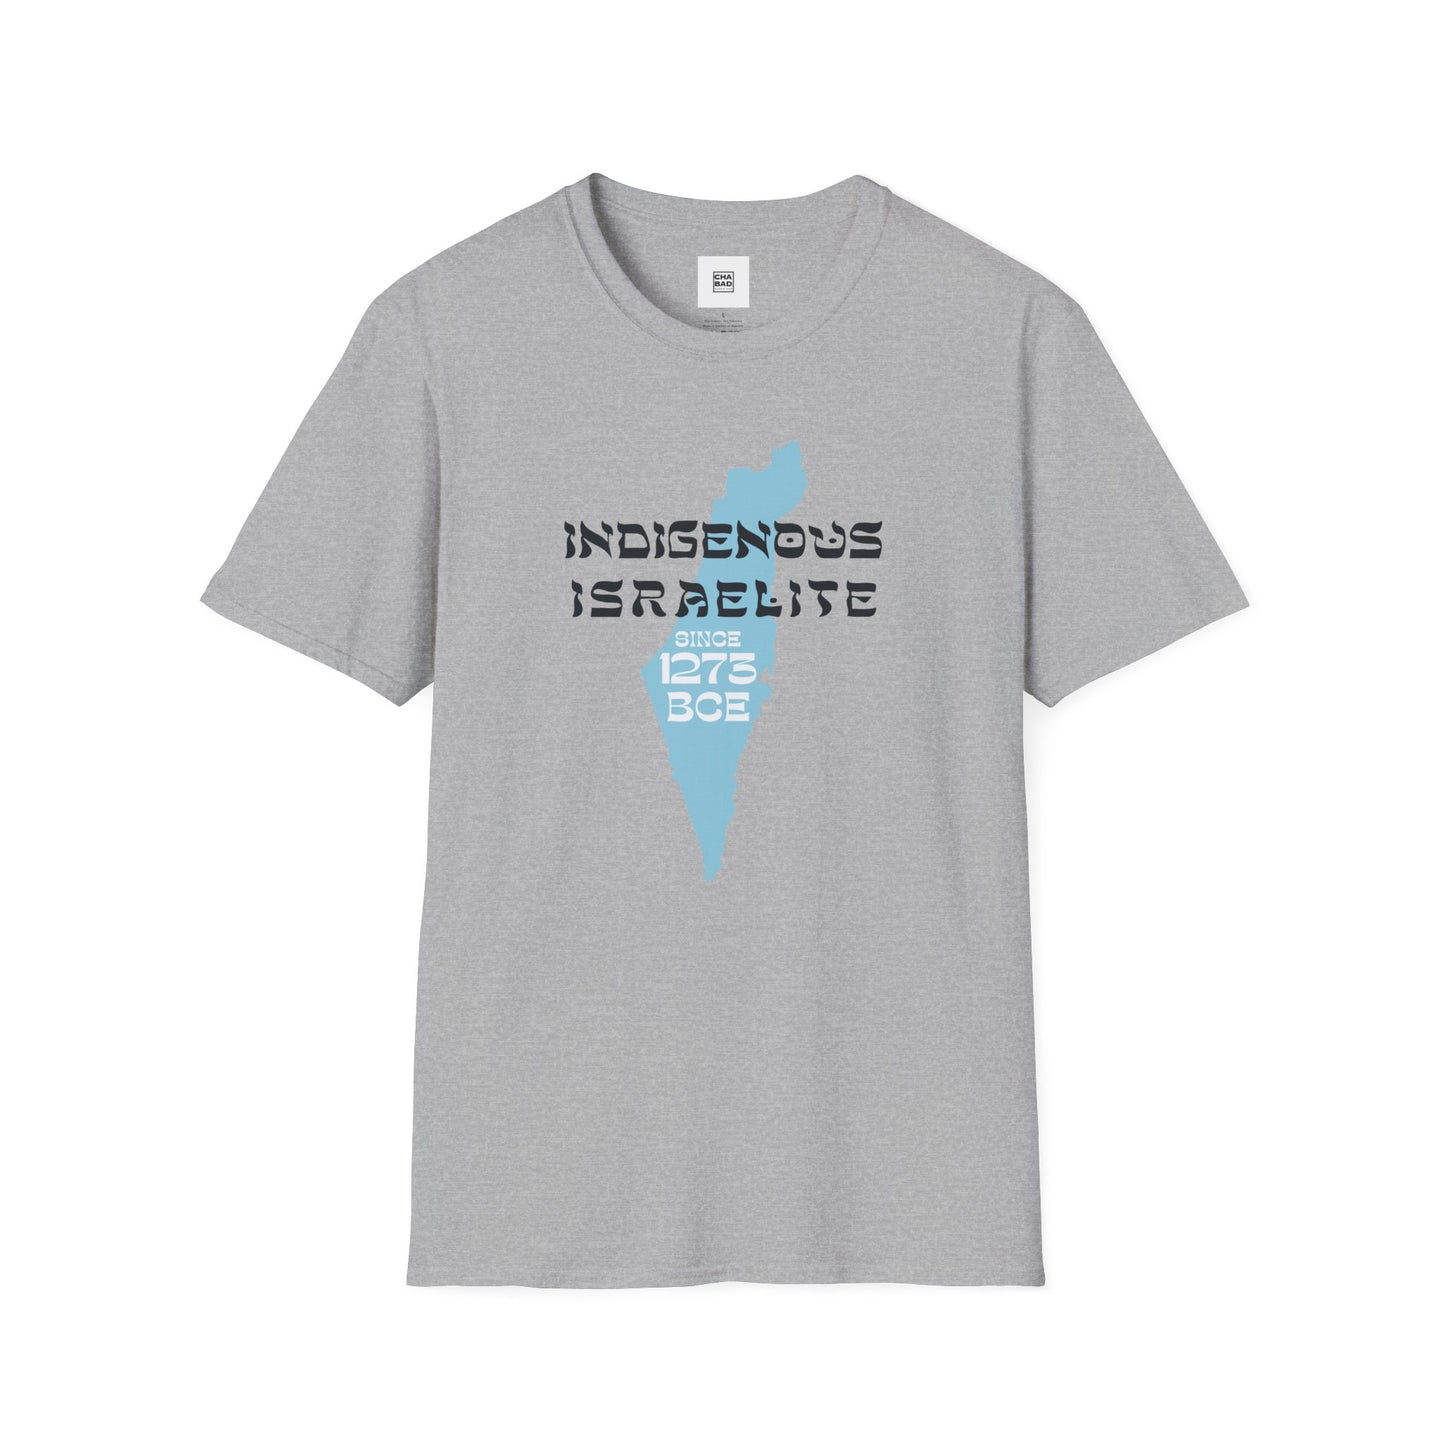 Indigenous Israelite T-shirt - Jewish Pride